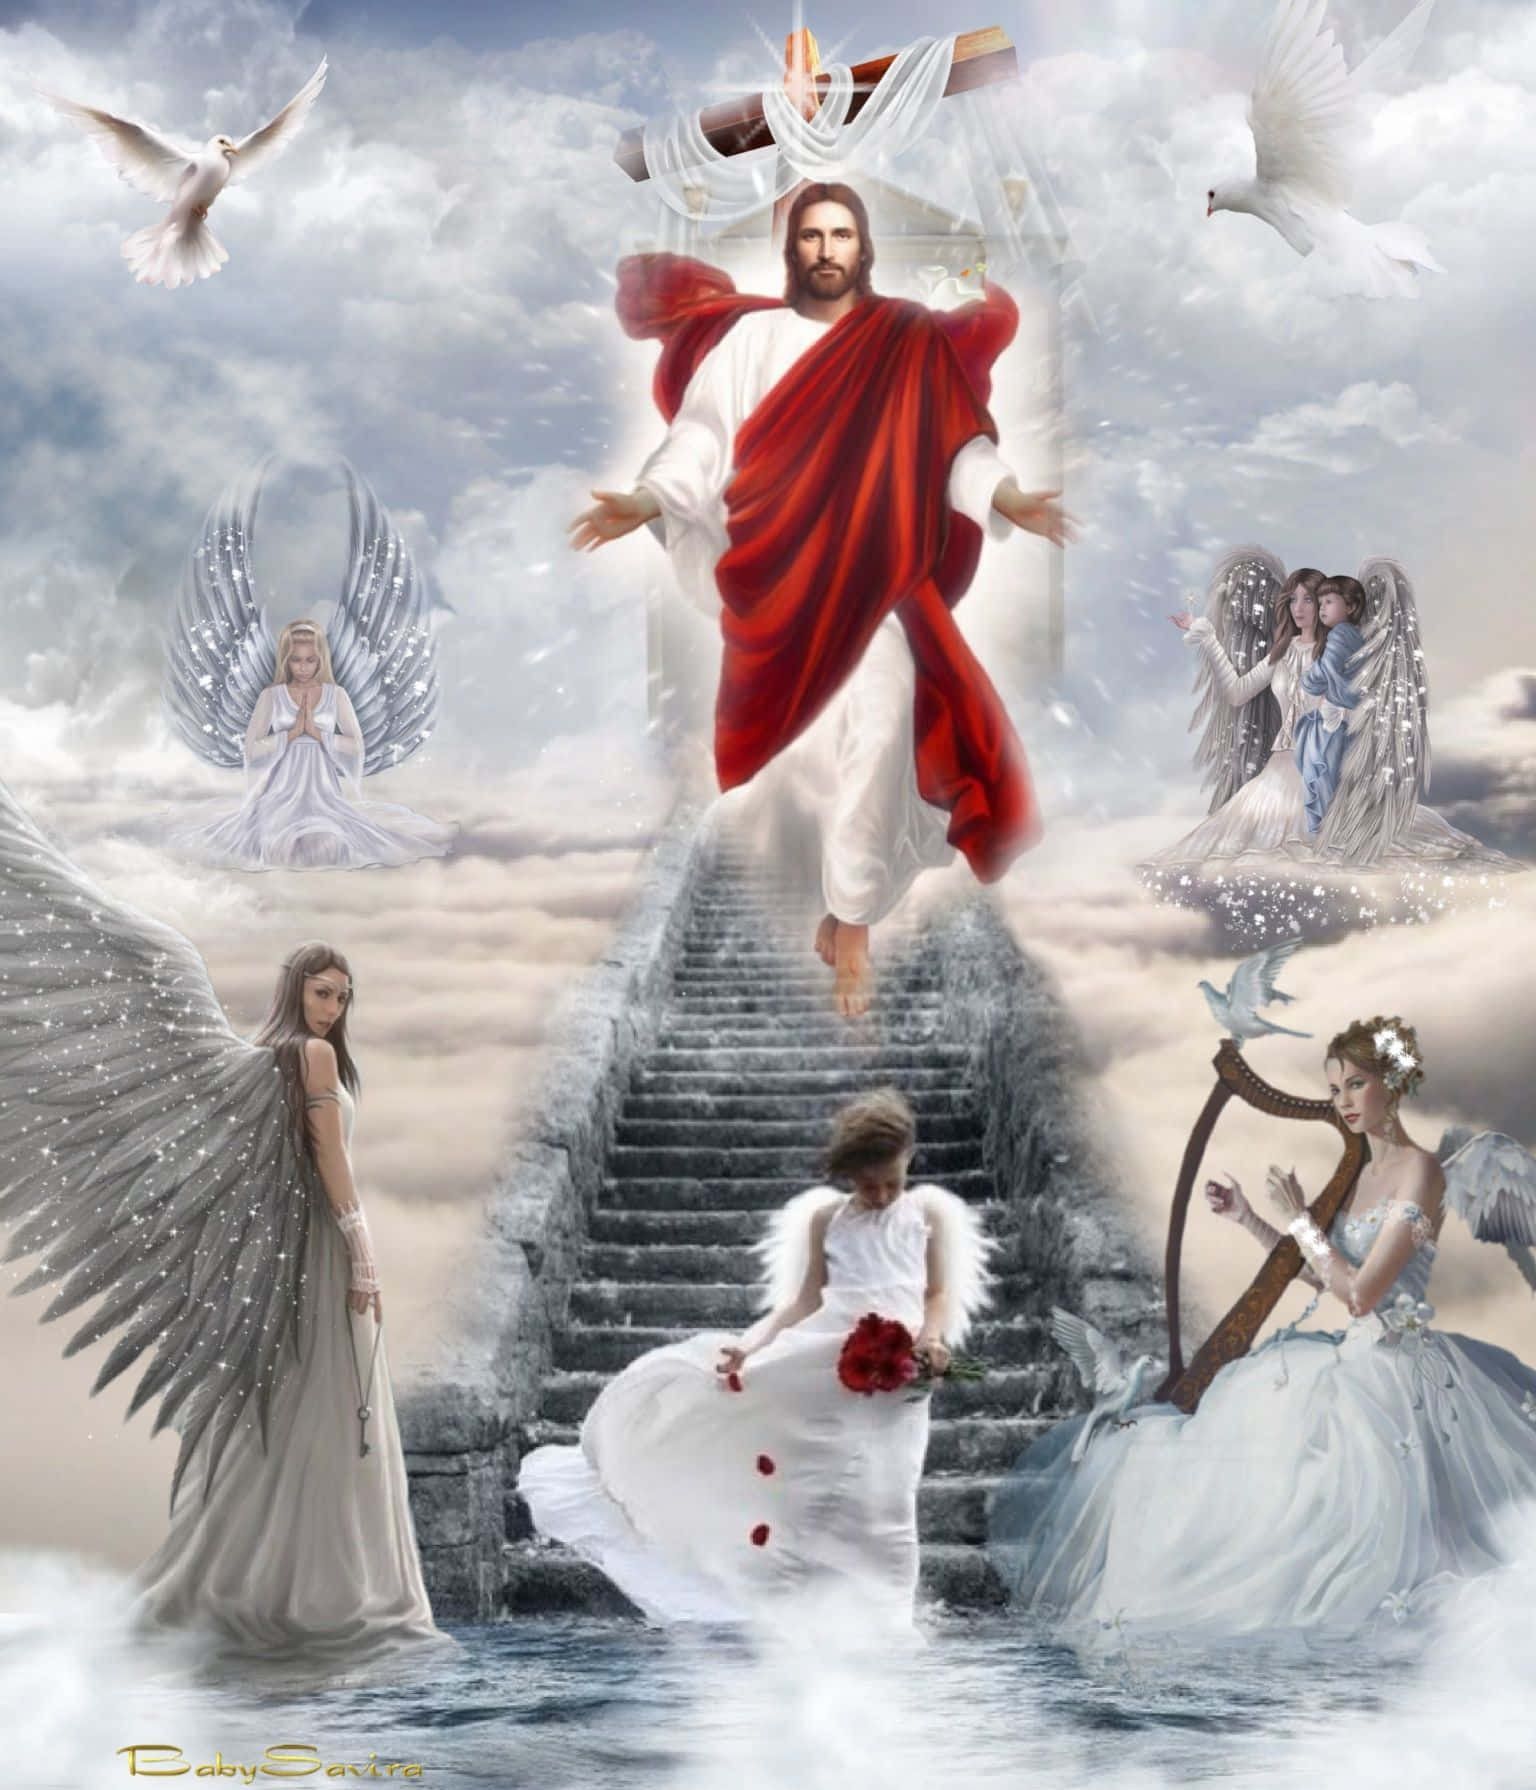 Jesu i himlen med engle tapetet Wallpaper